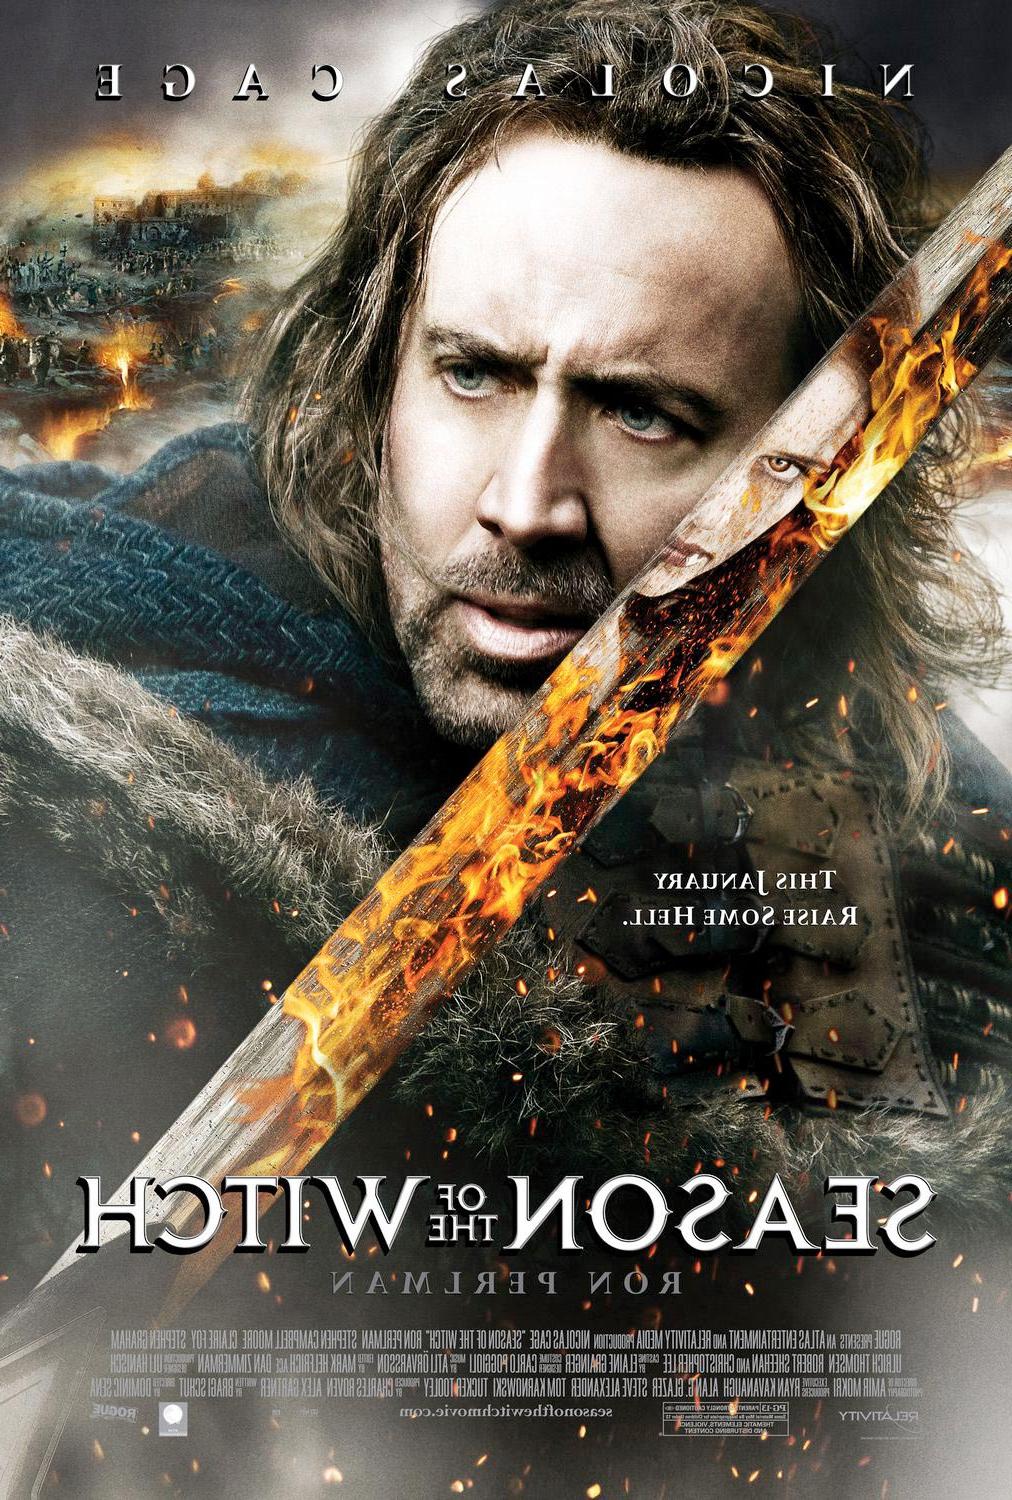 Starring: Nicolas Cage, Ron